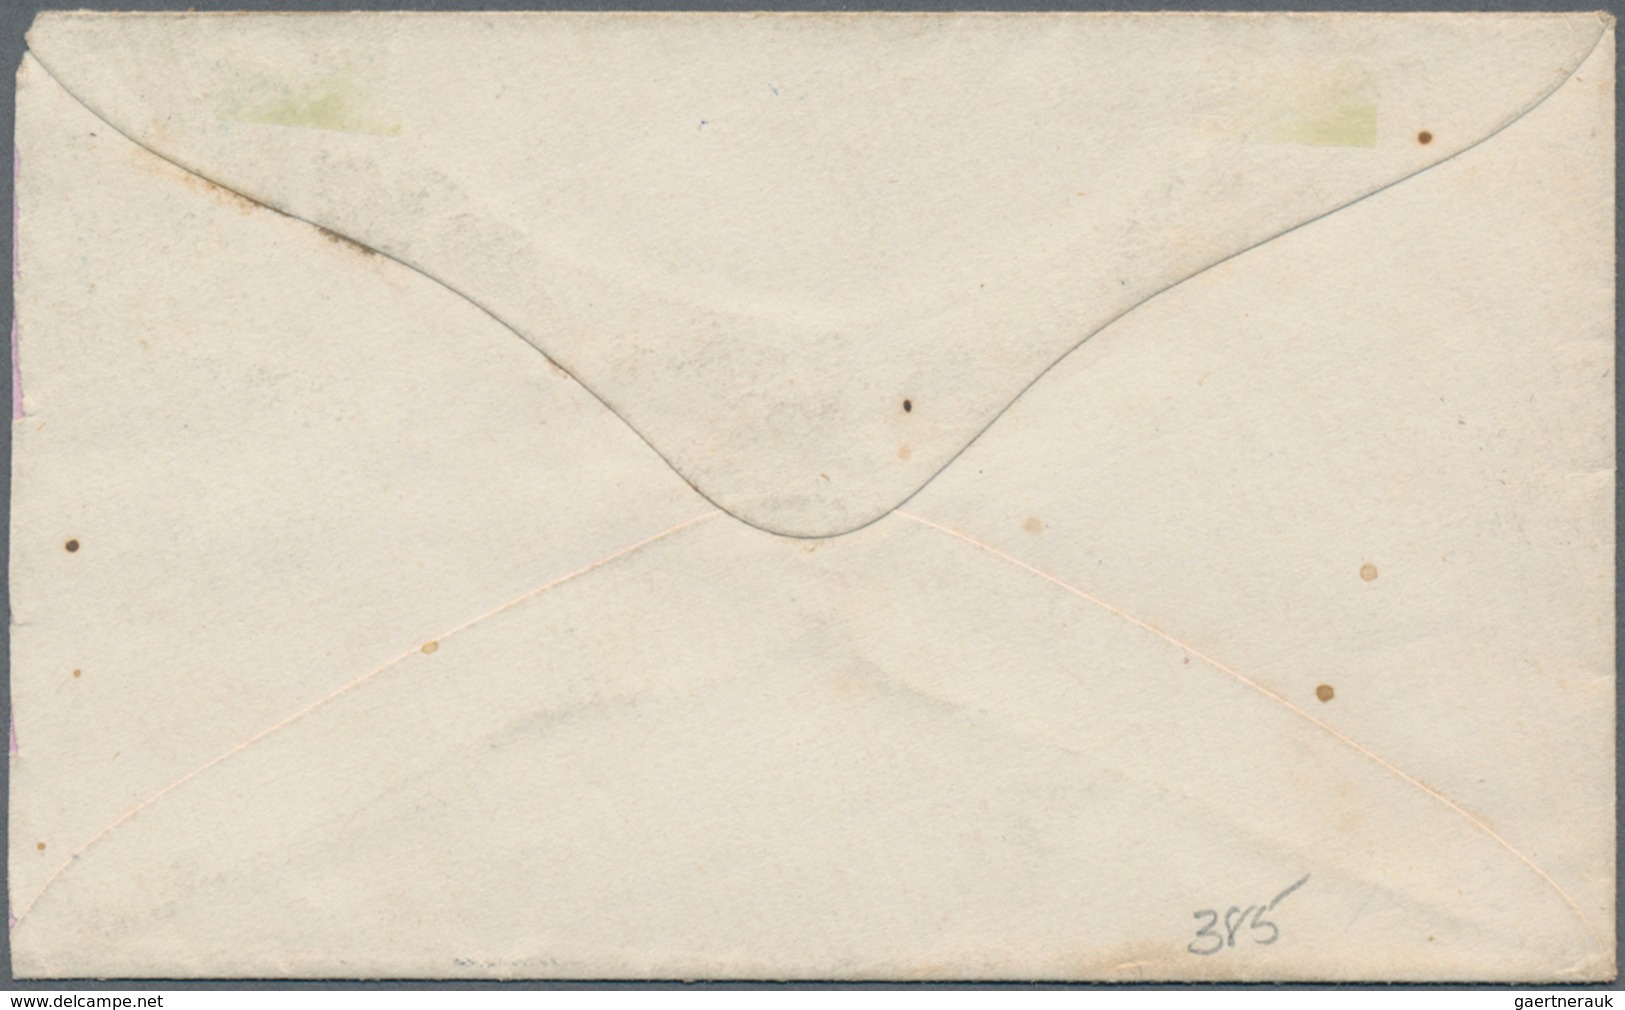 Vereinigte Staaten Von Amerika - Stempel: ST. LOUIS: 1870's, Washington 3c. Green Used On Cover With - Poststempel